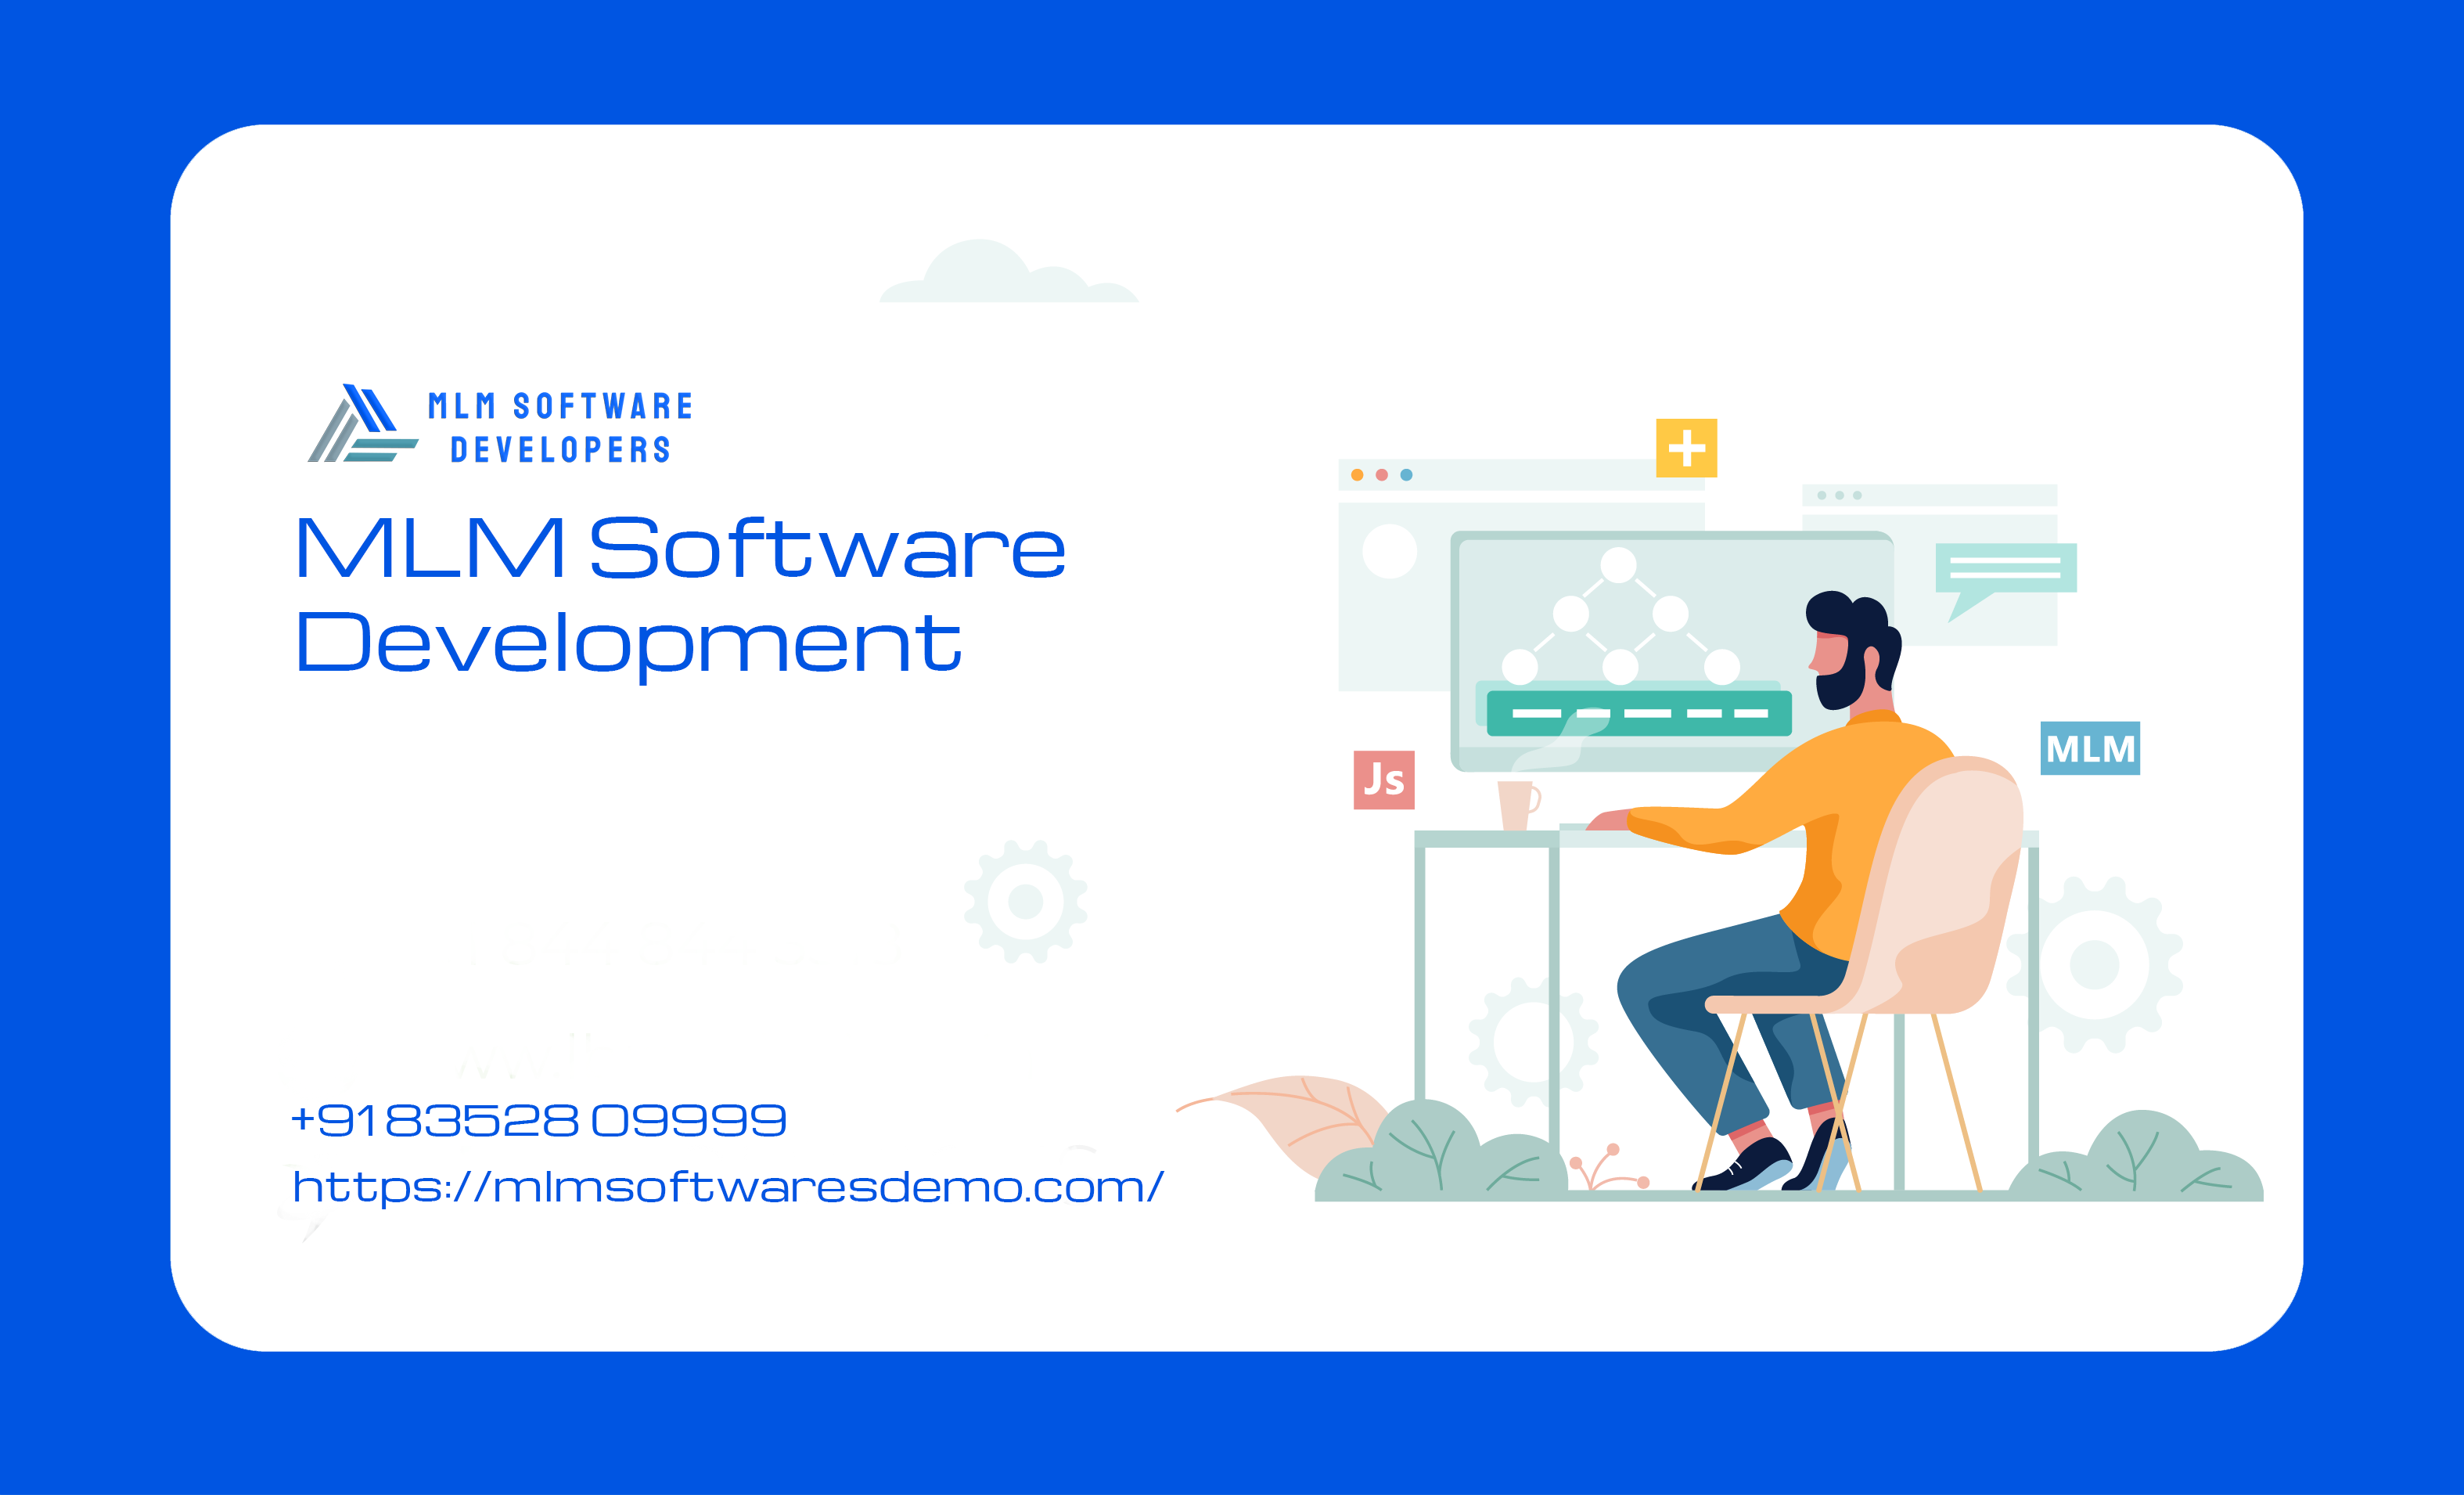 MLM Software Development Company Haryana